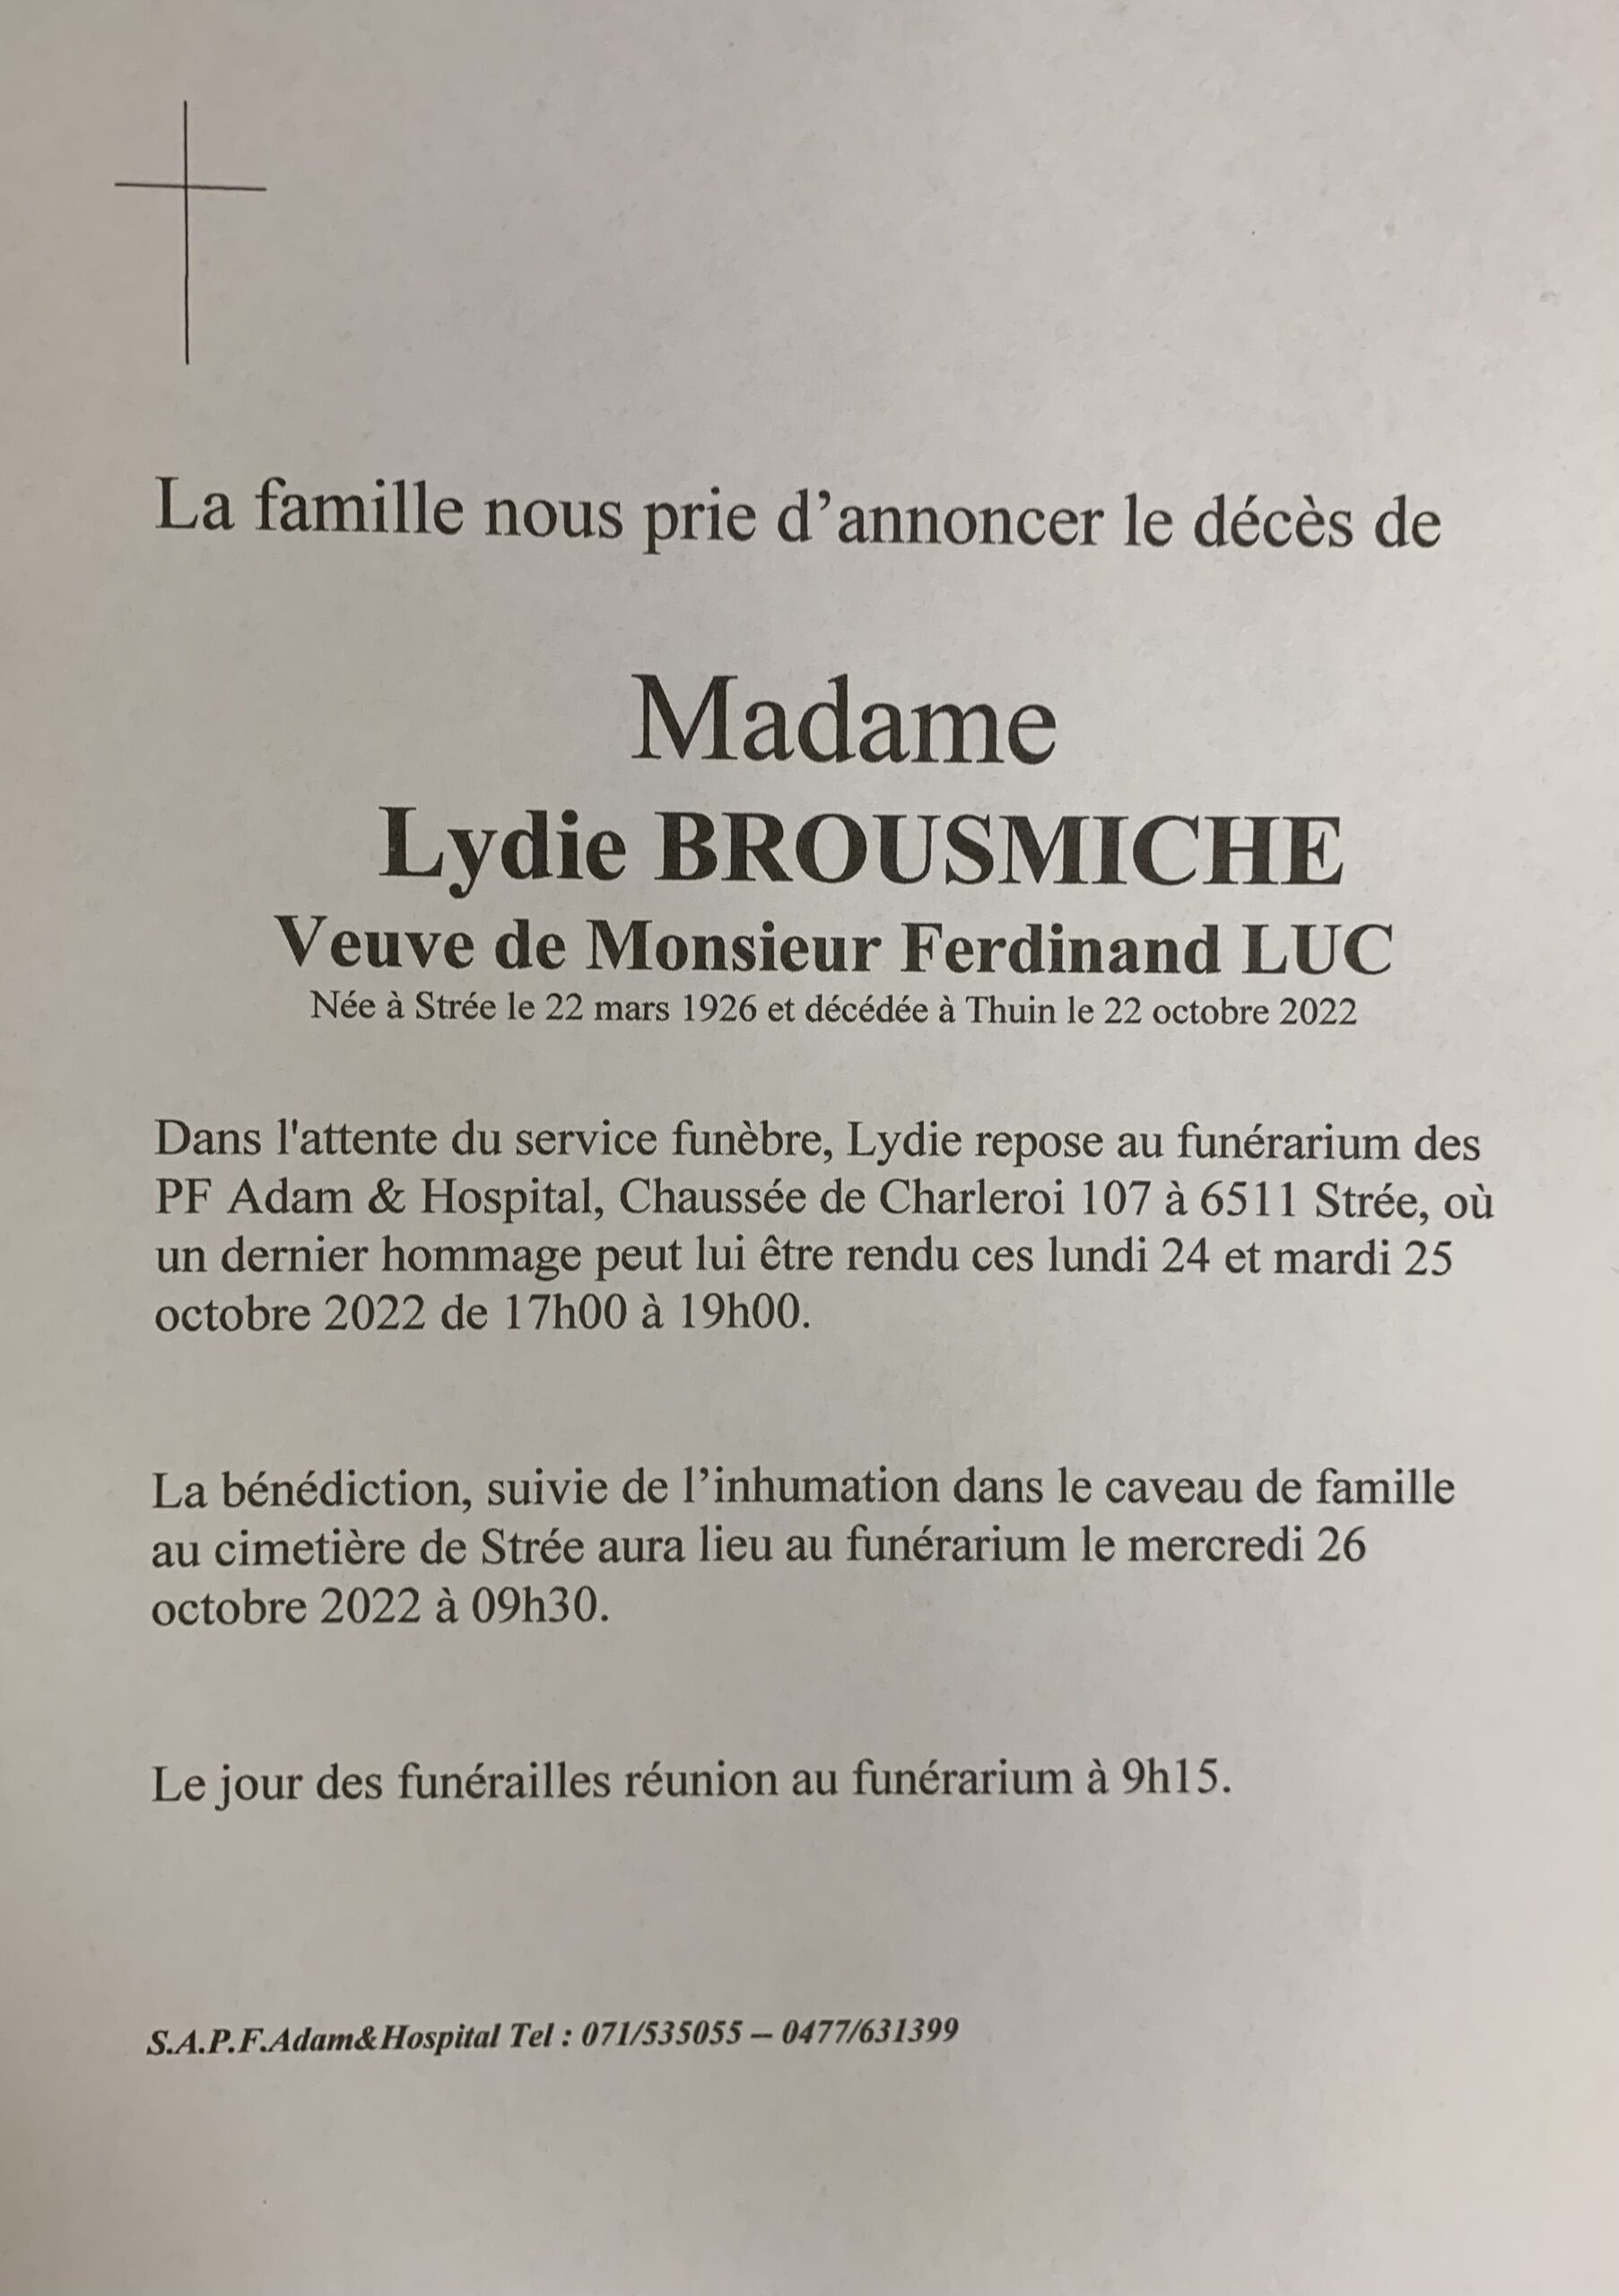 Madame Lydie Brousmiche scaled | Funérailles Adam Hospital